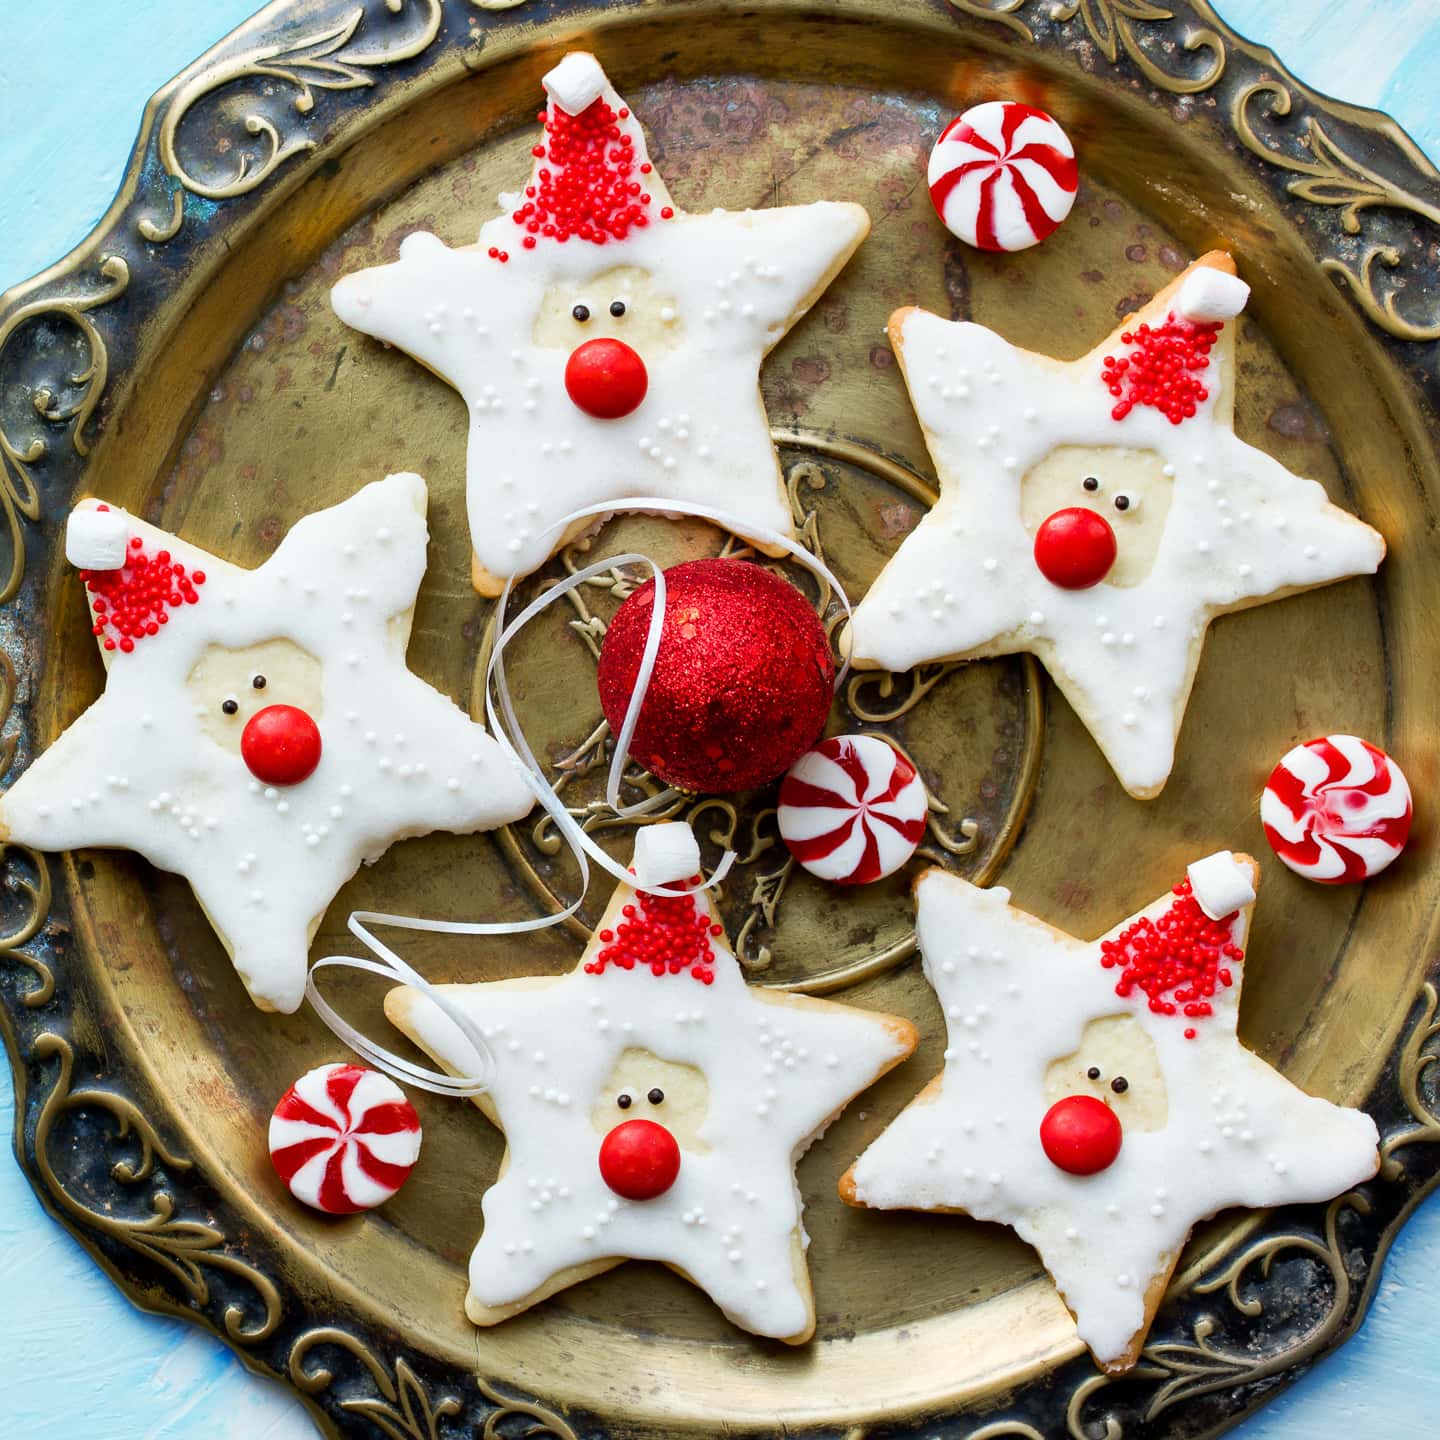 Star-shaped Christmas sugar cookies decorated like Santa Claus.